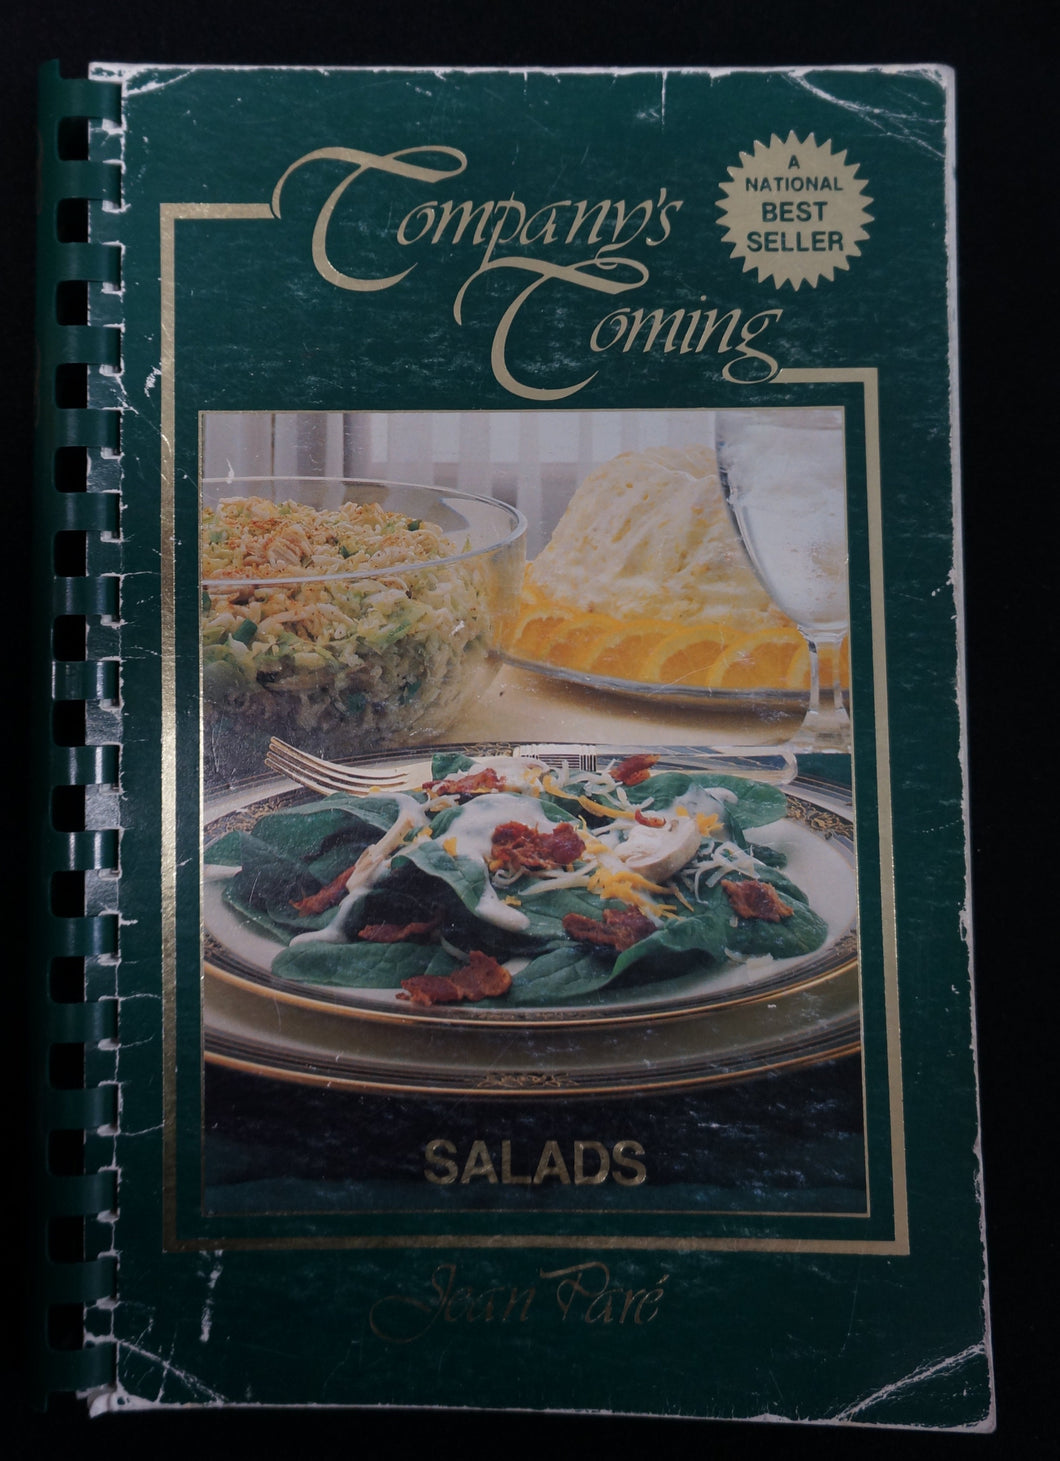 Company's Coming - Salads